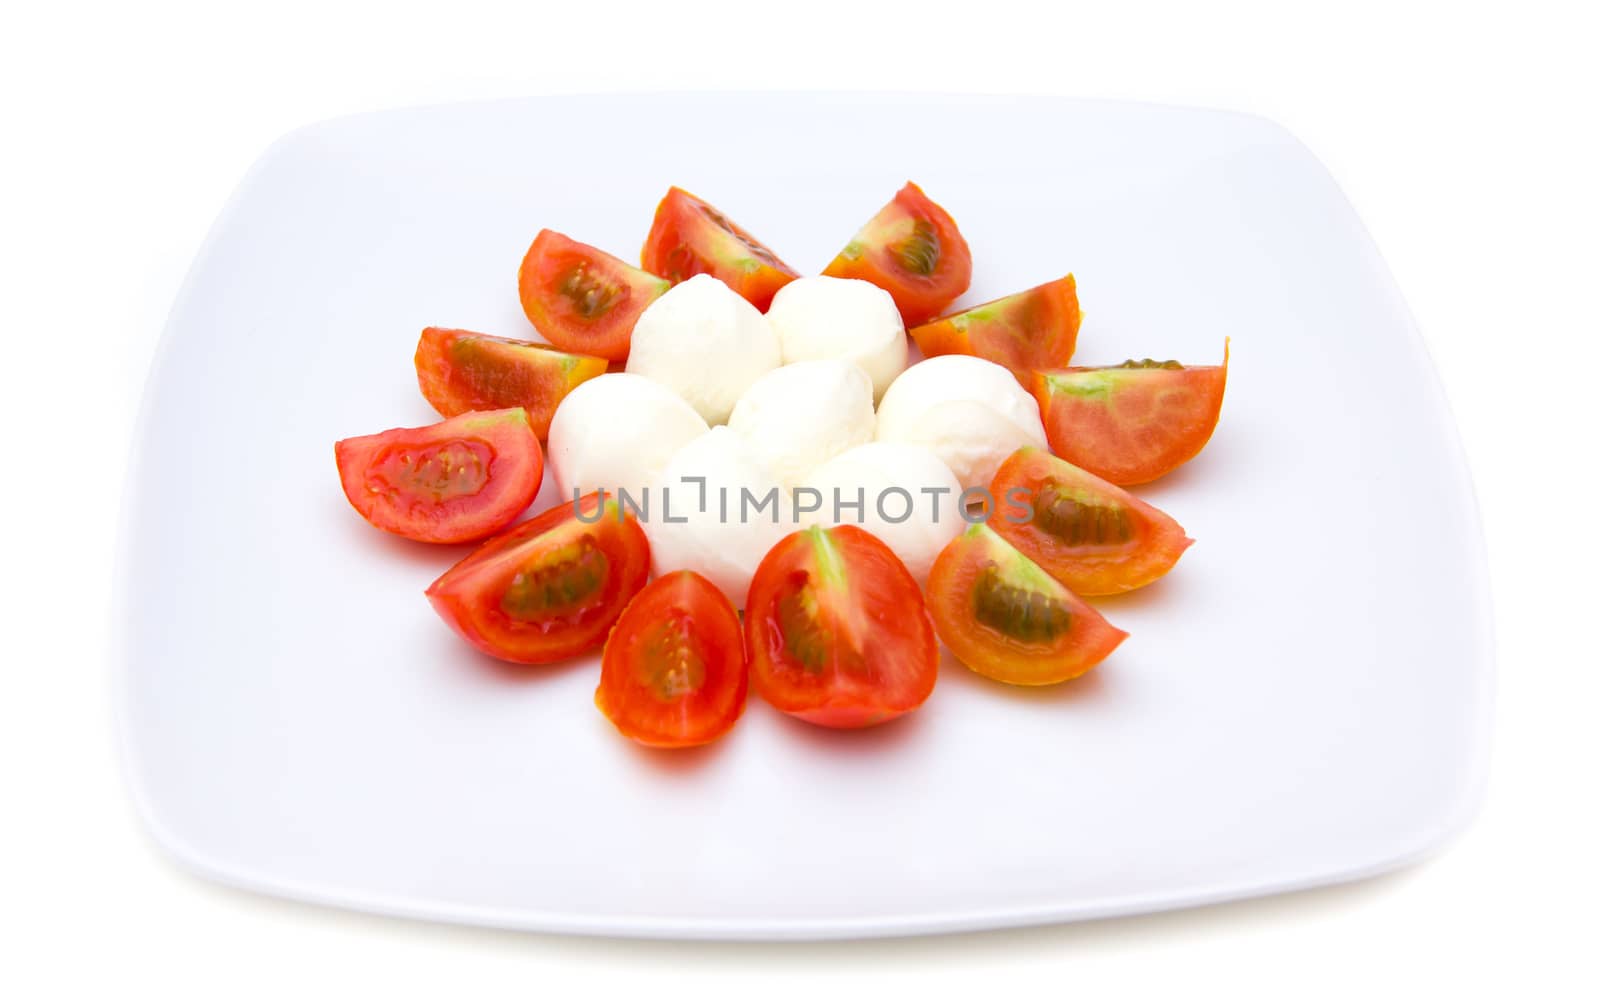 Plate with mozzarella and tomato on white background